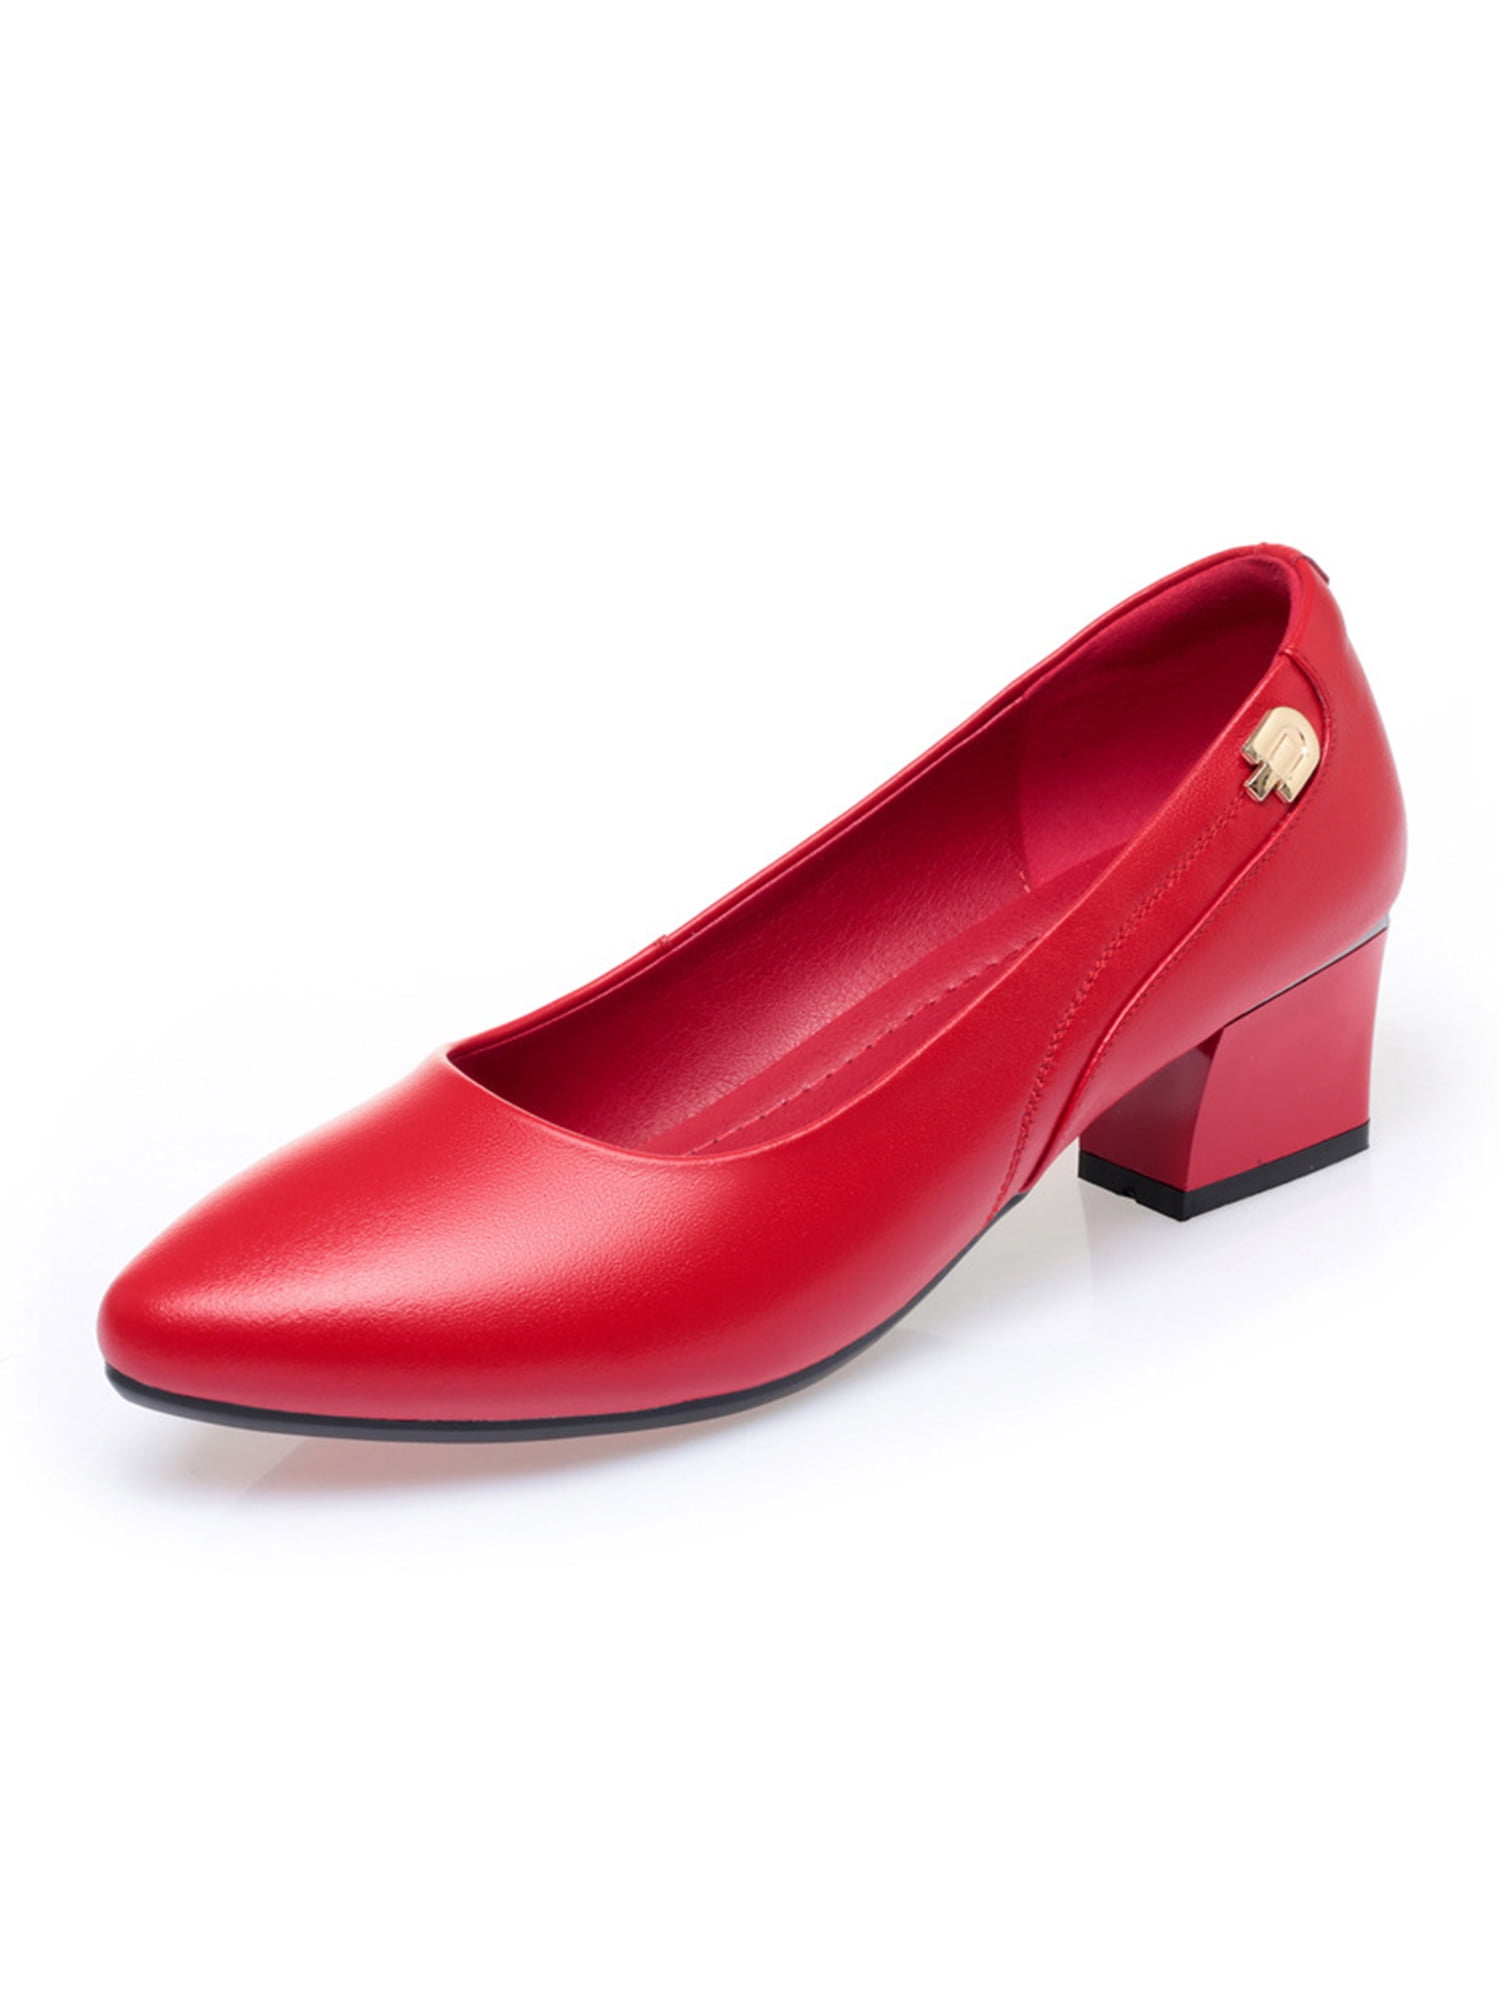 CINAK Low Heel Chunky Heels Dress Shoes for Women- Comfortable Ankle Strap  Pumps Square Toe Ladies Mary Jane ... price in UAE | Amazon UAE | kanbkam